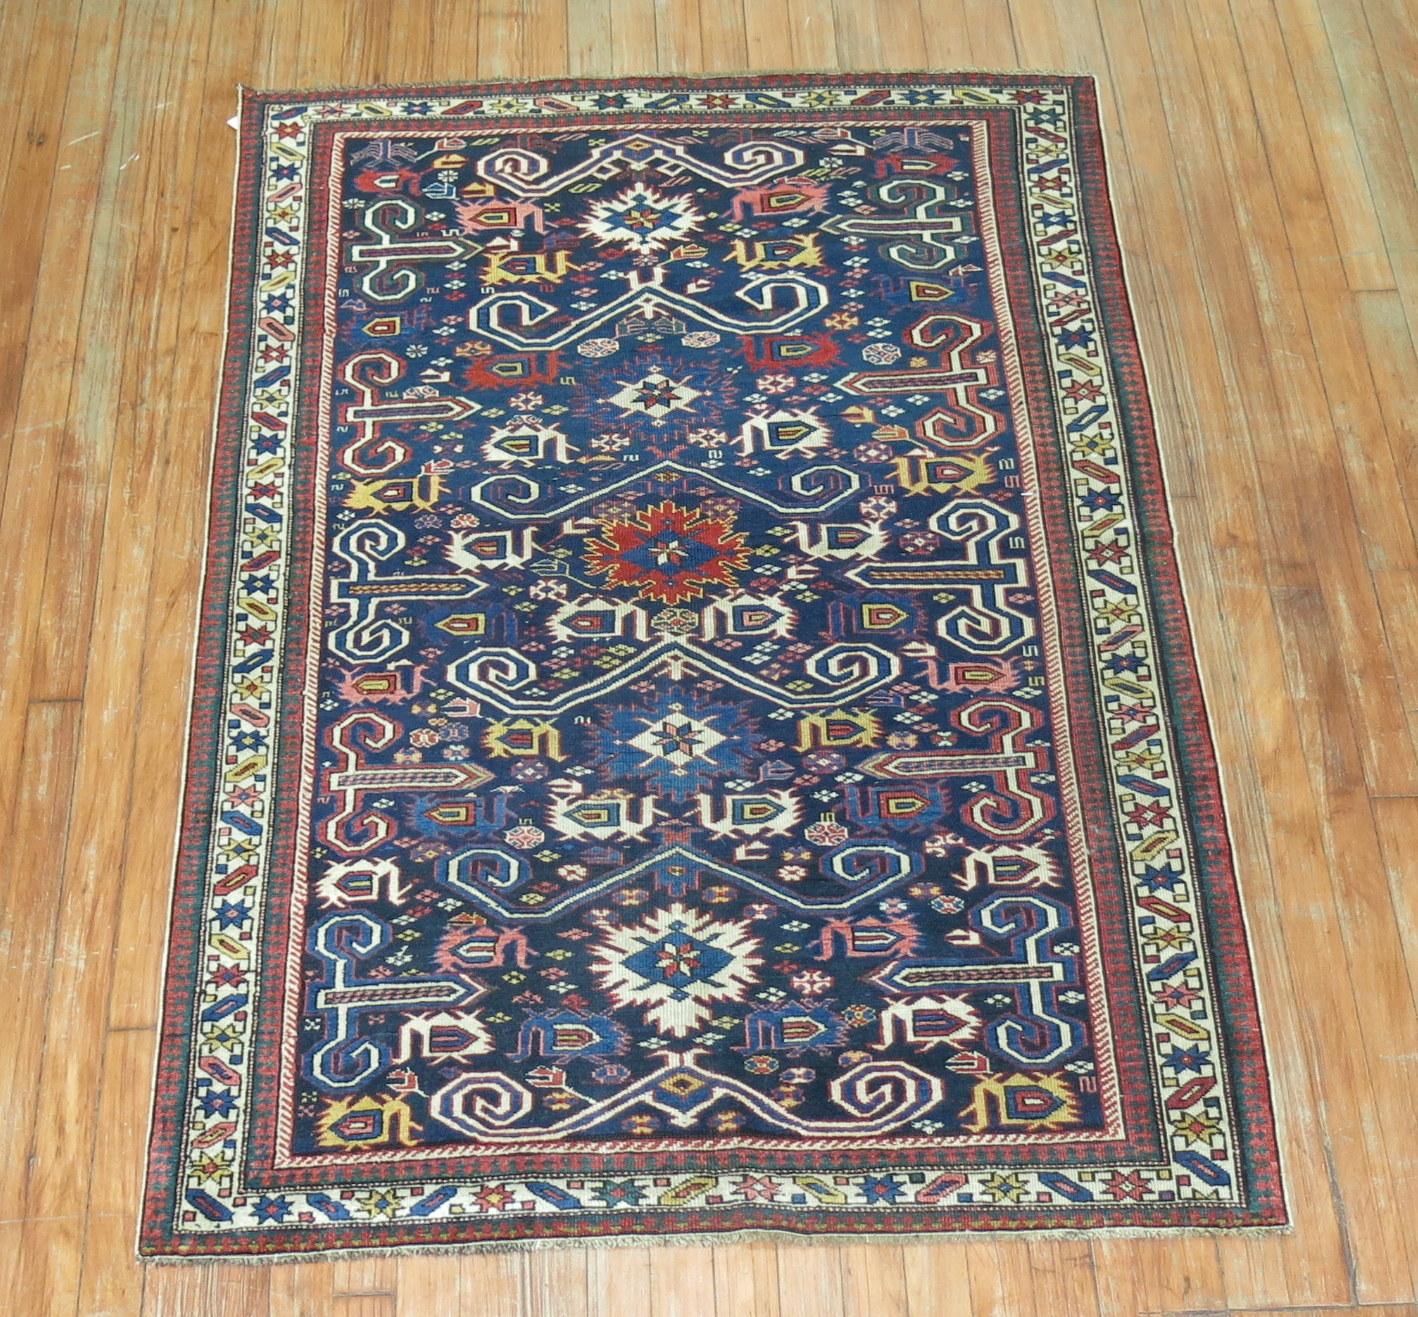 An authentic navy blue antique Caucasian perdedil rug.